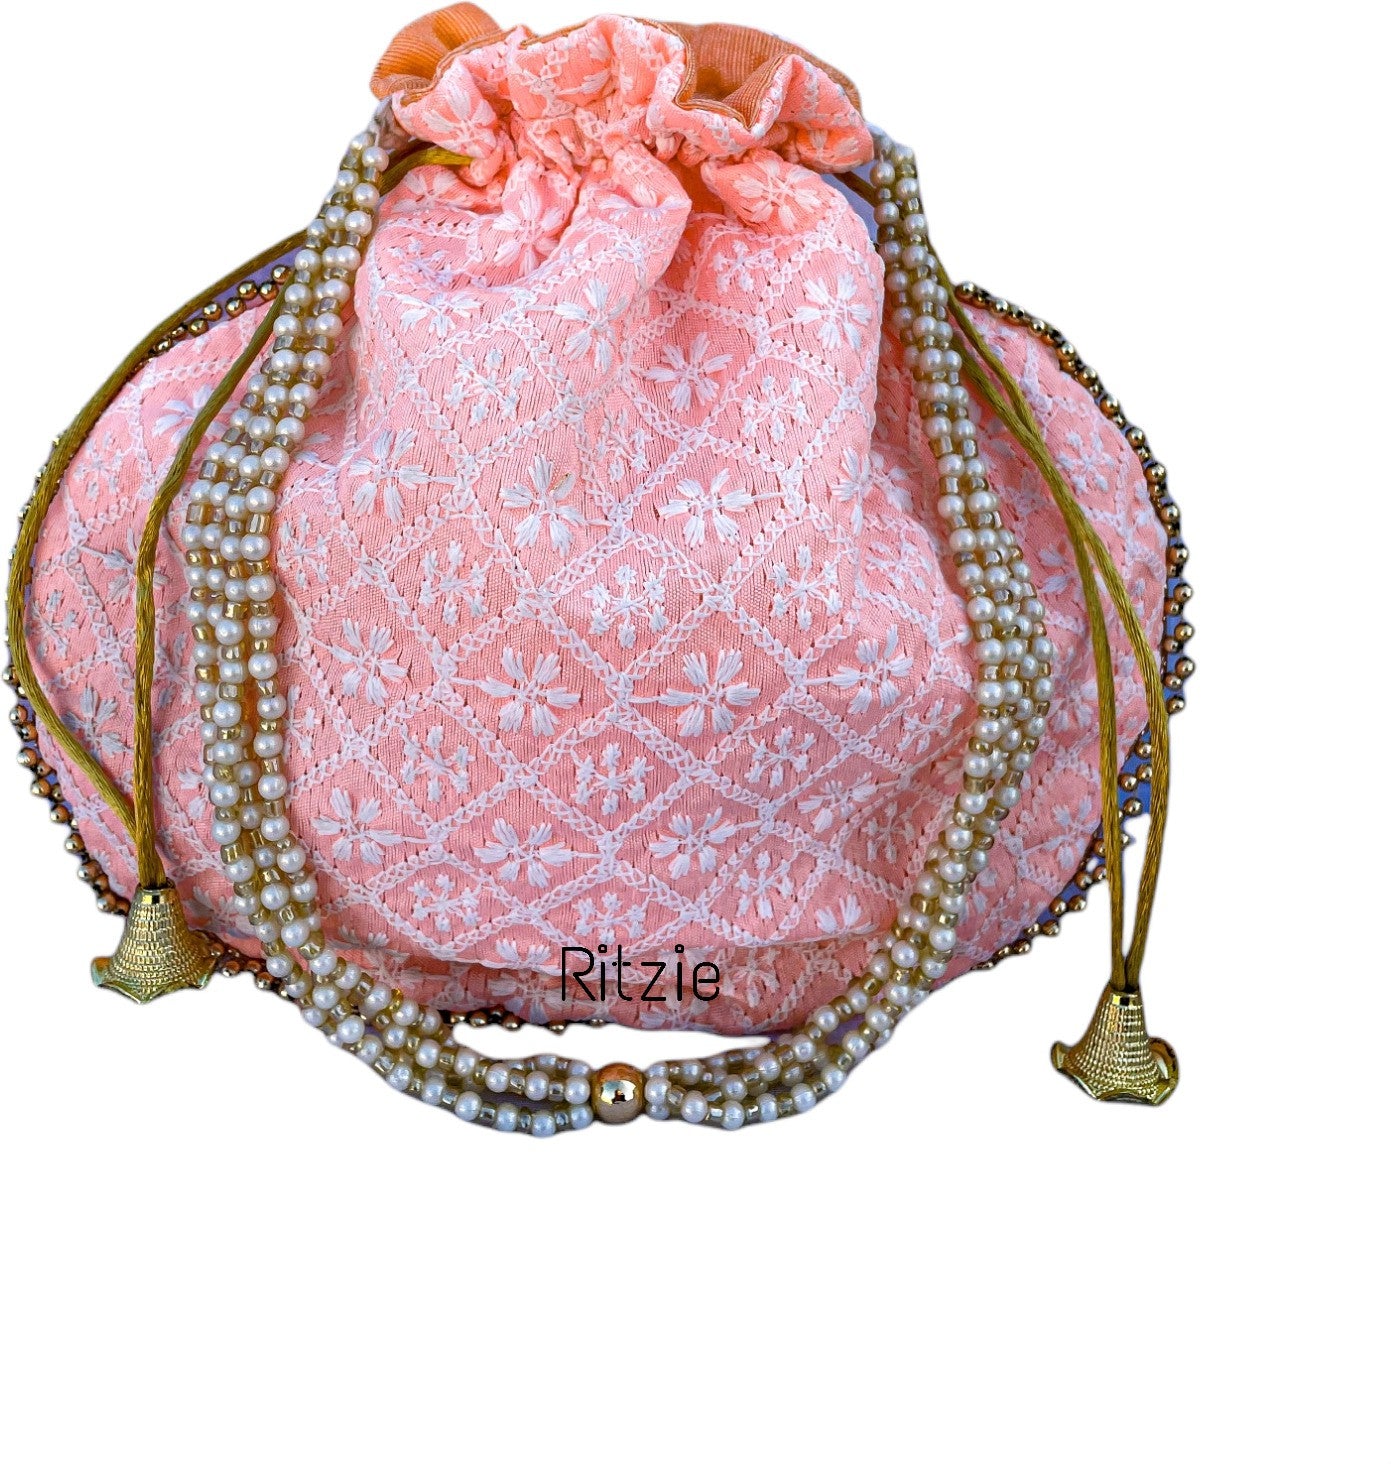 Women's Chickenkari Embroidered Design Potli    Wedding Wristlets - Ritzie